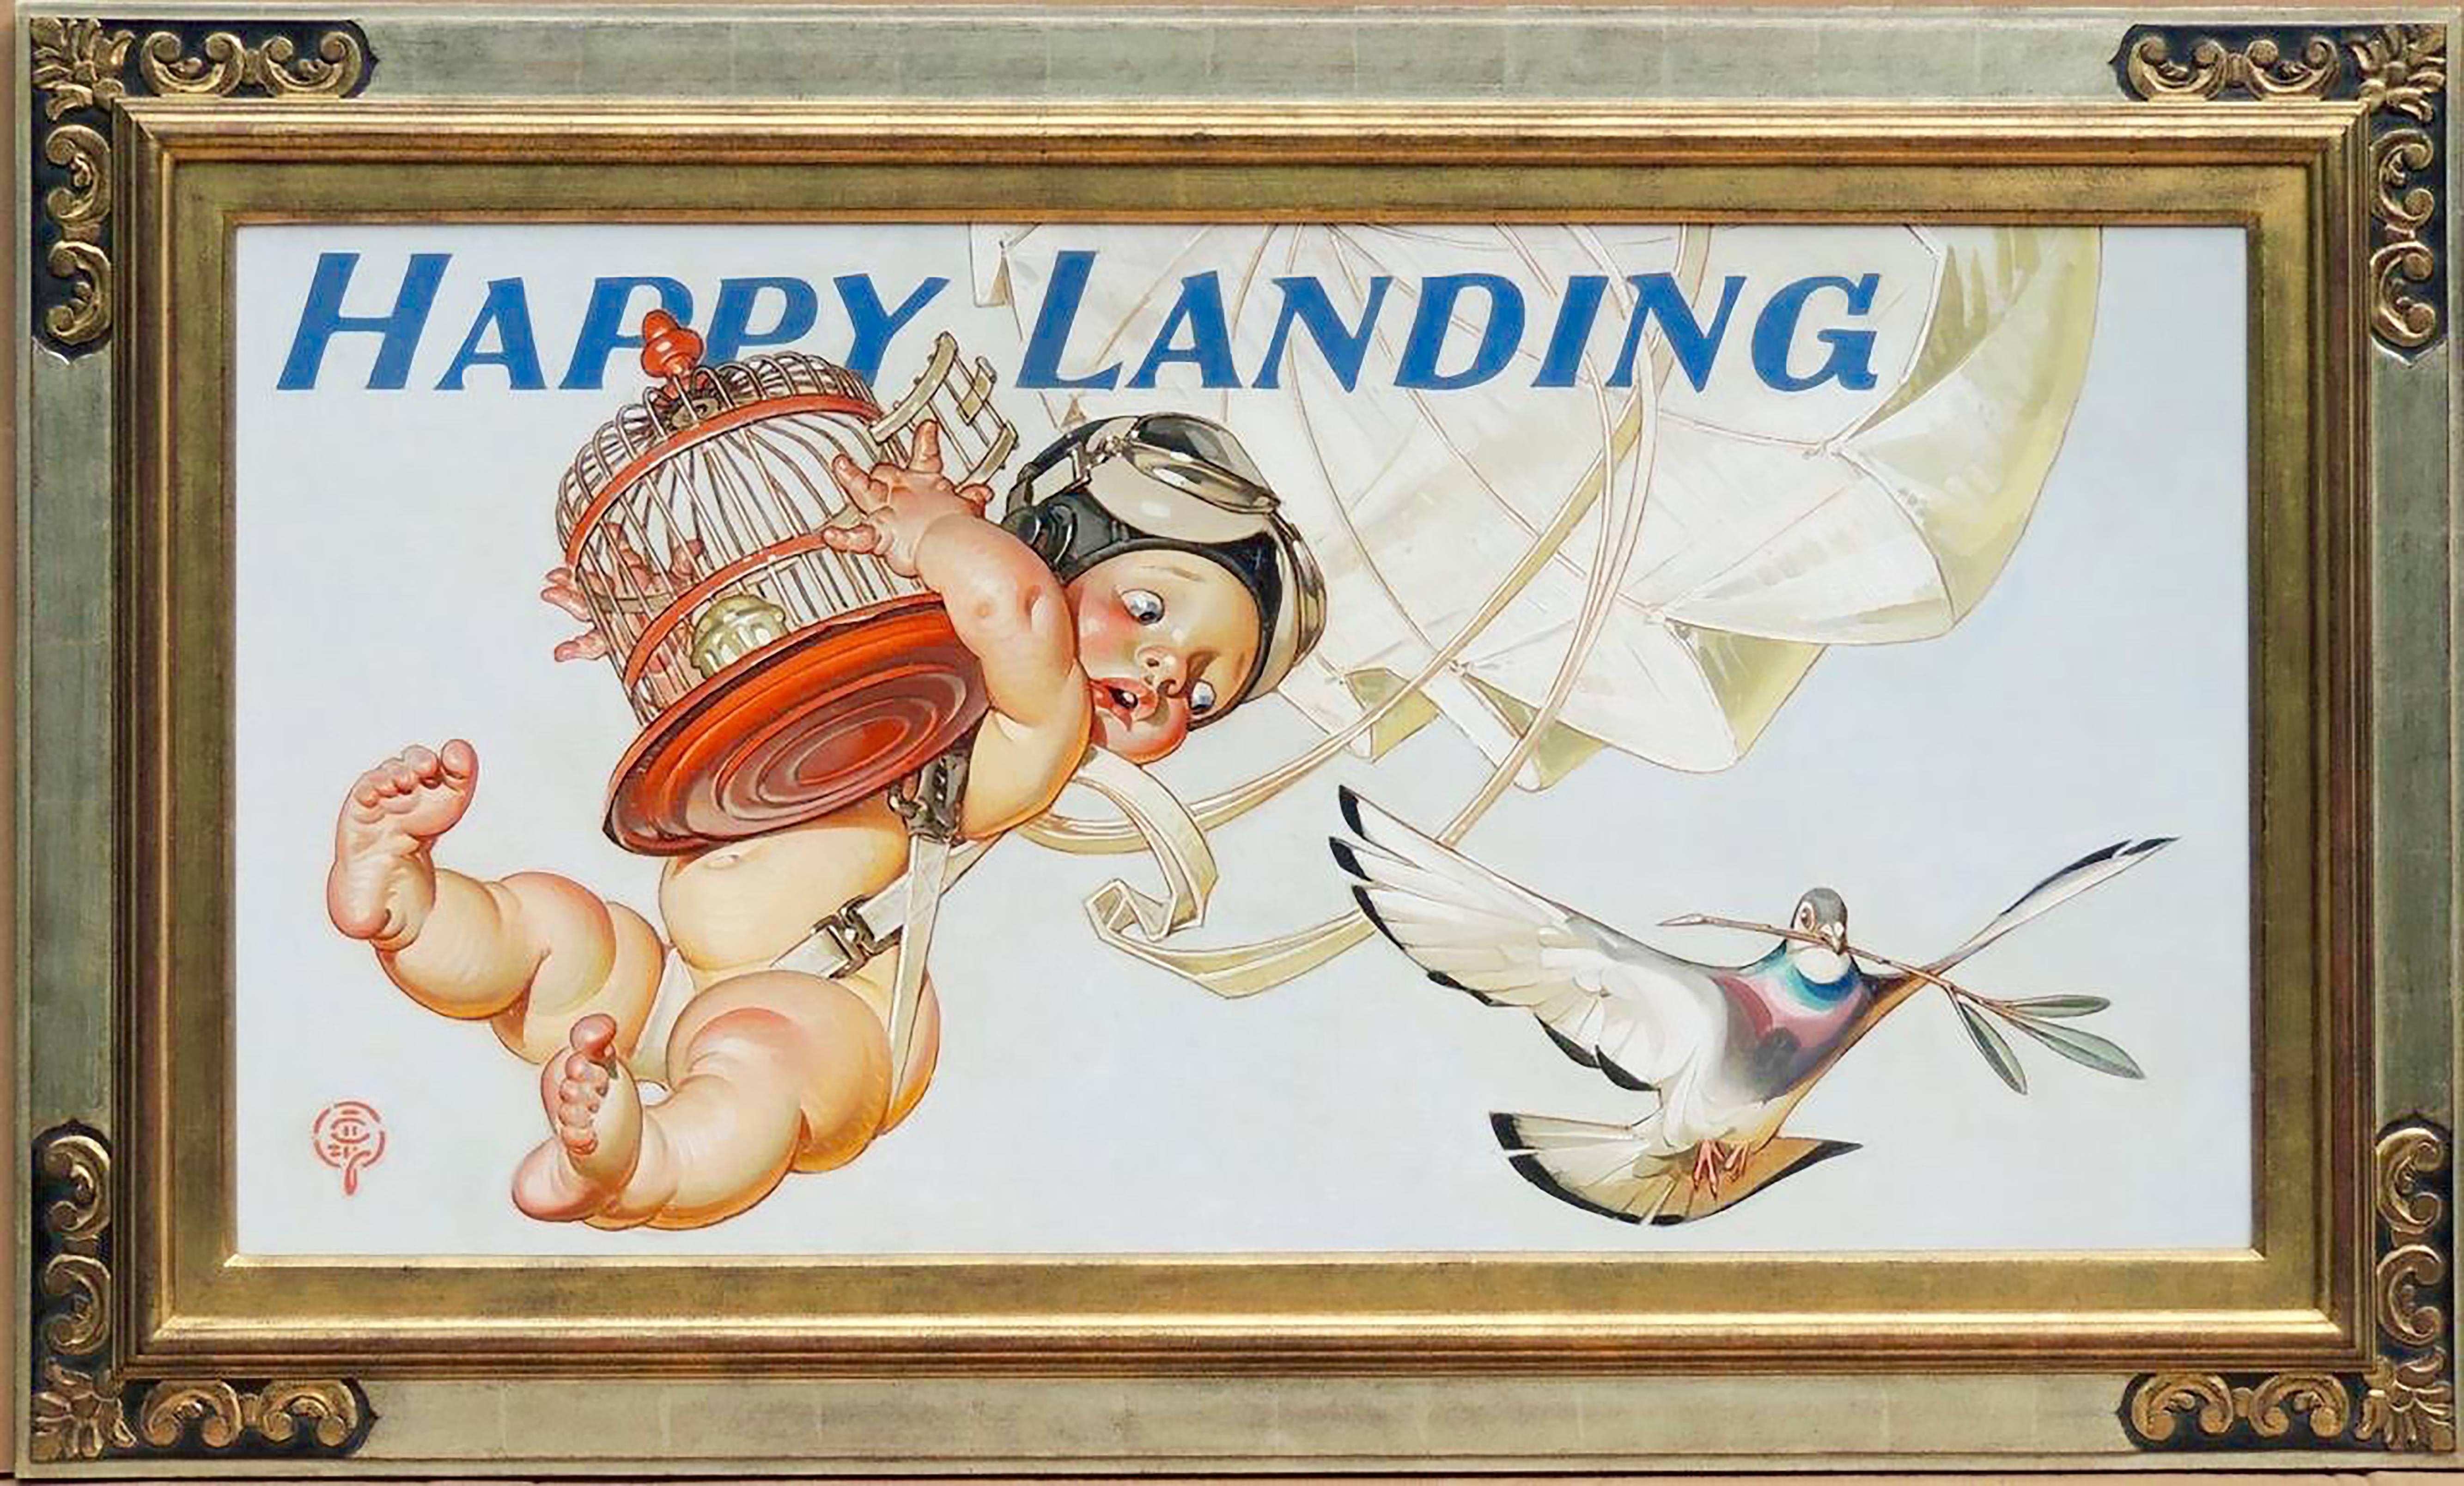 Happy Landing, Amoco Advertisement - Painting by Joseph Christian Leyendecker